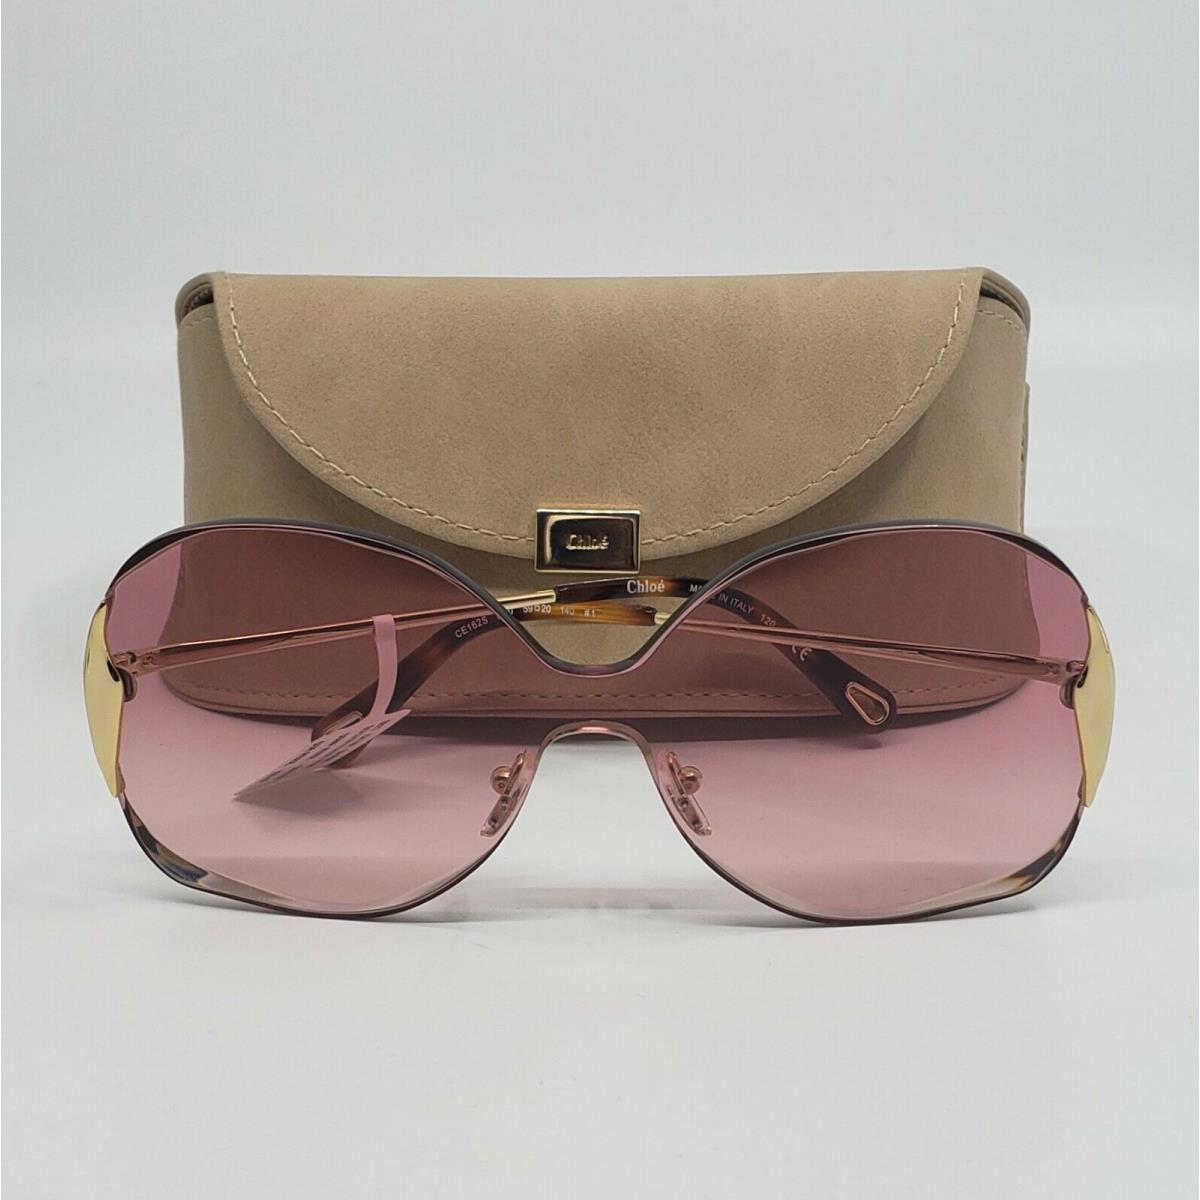 Chloé sunglasses  - Gold Frame, Pink Lens 4